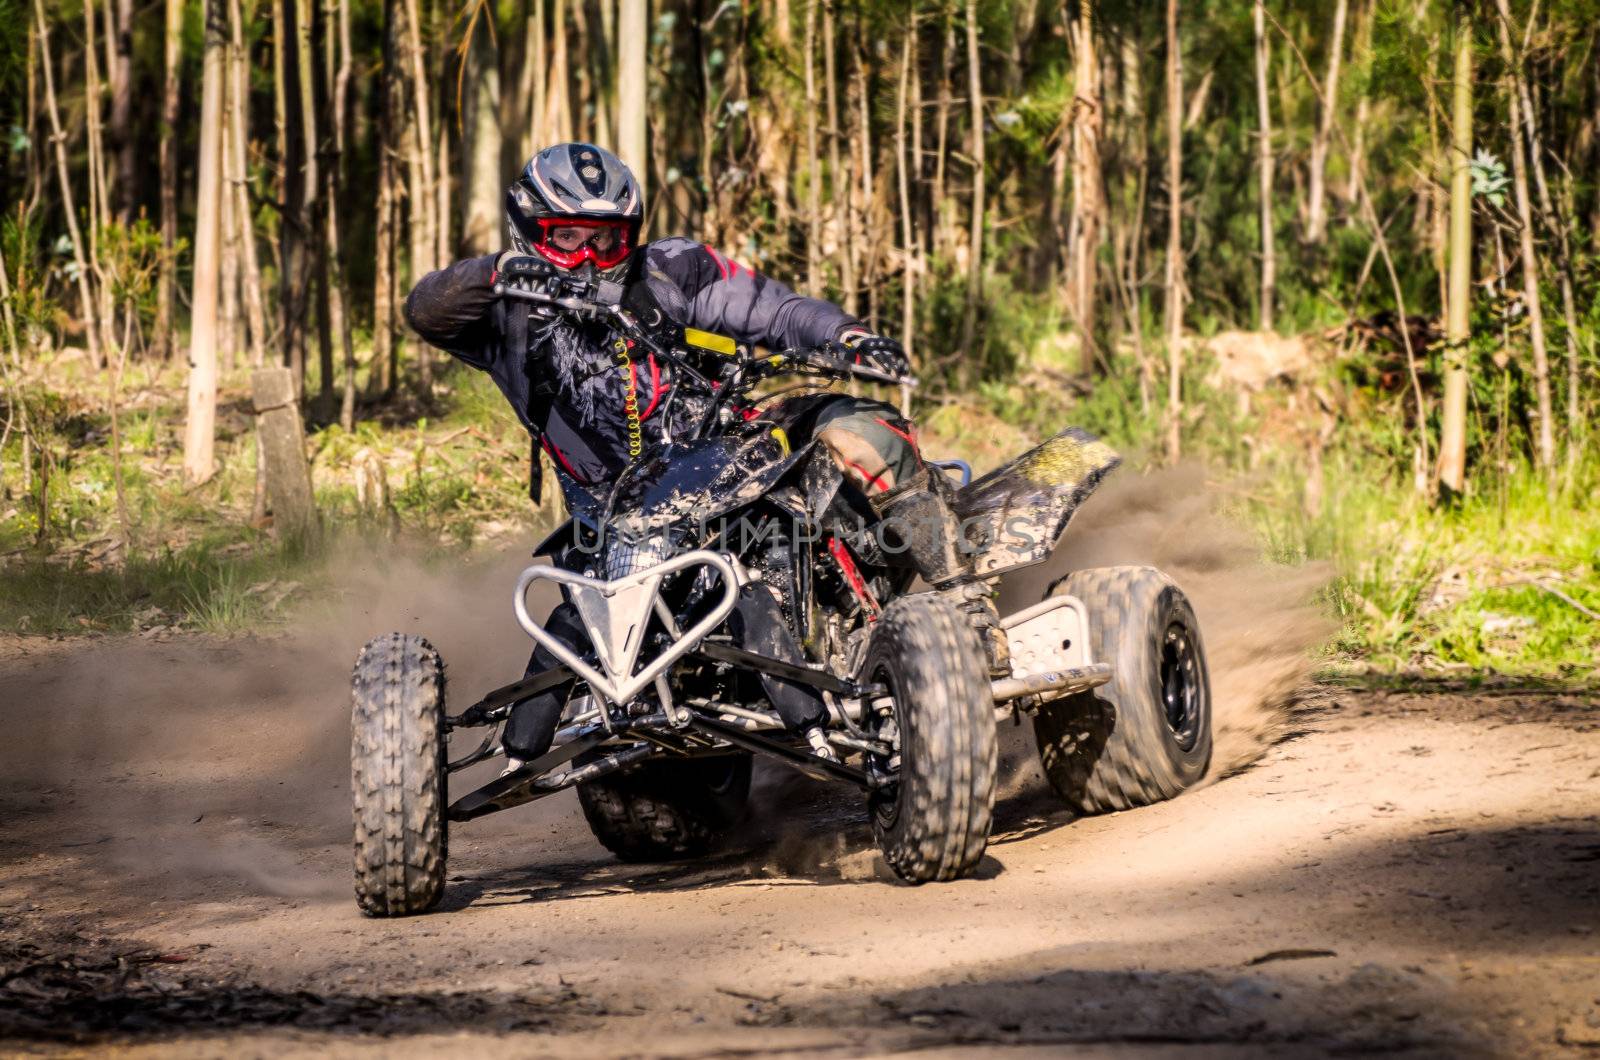 ATV racer takes a turn during a race on a dusty terrain.